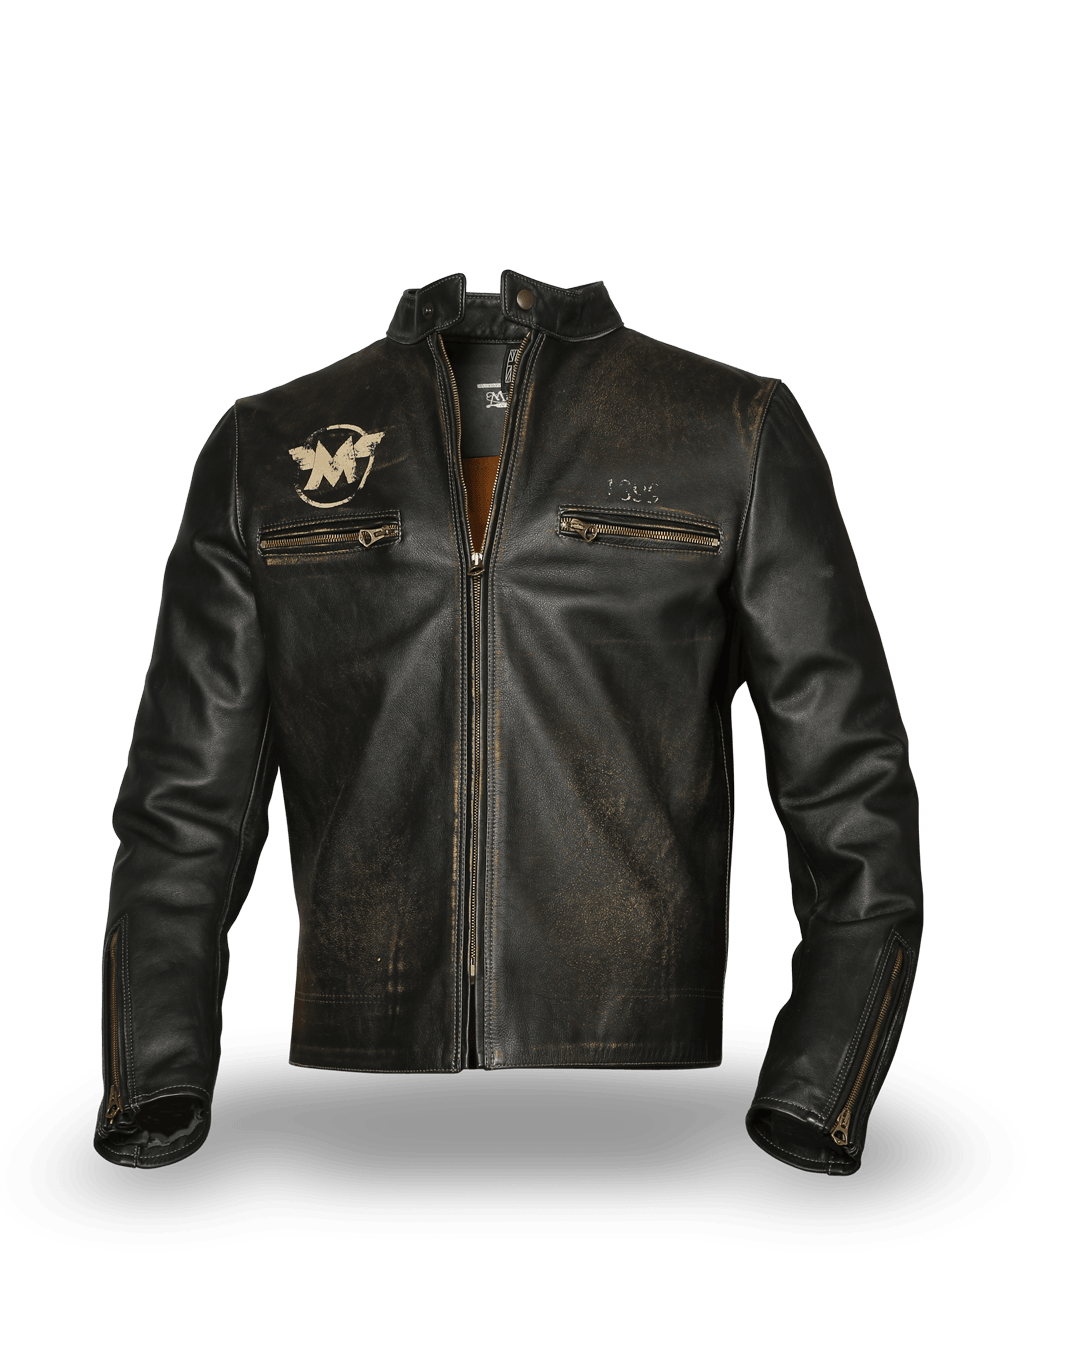 Matchless G50 Men's Leatherjacket, blackbrown | Gotlands Fashion